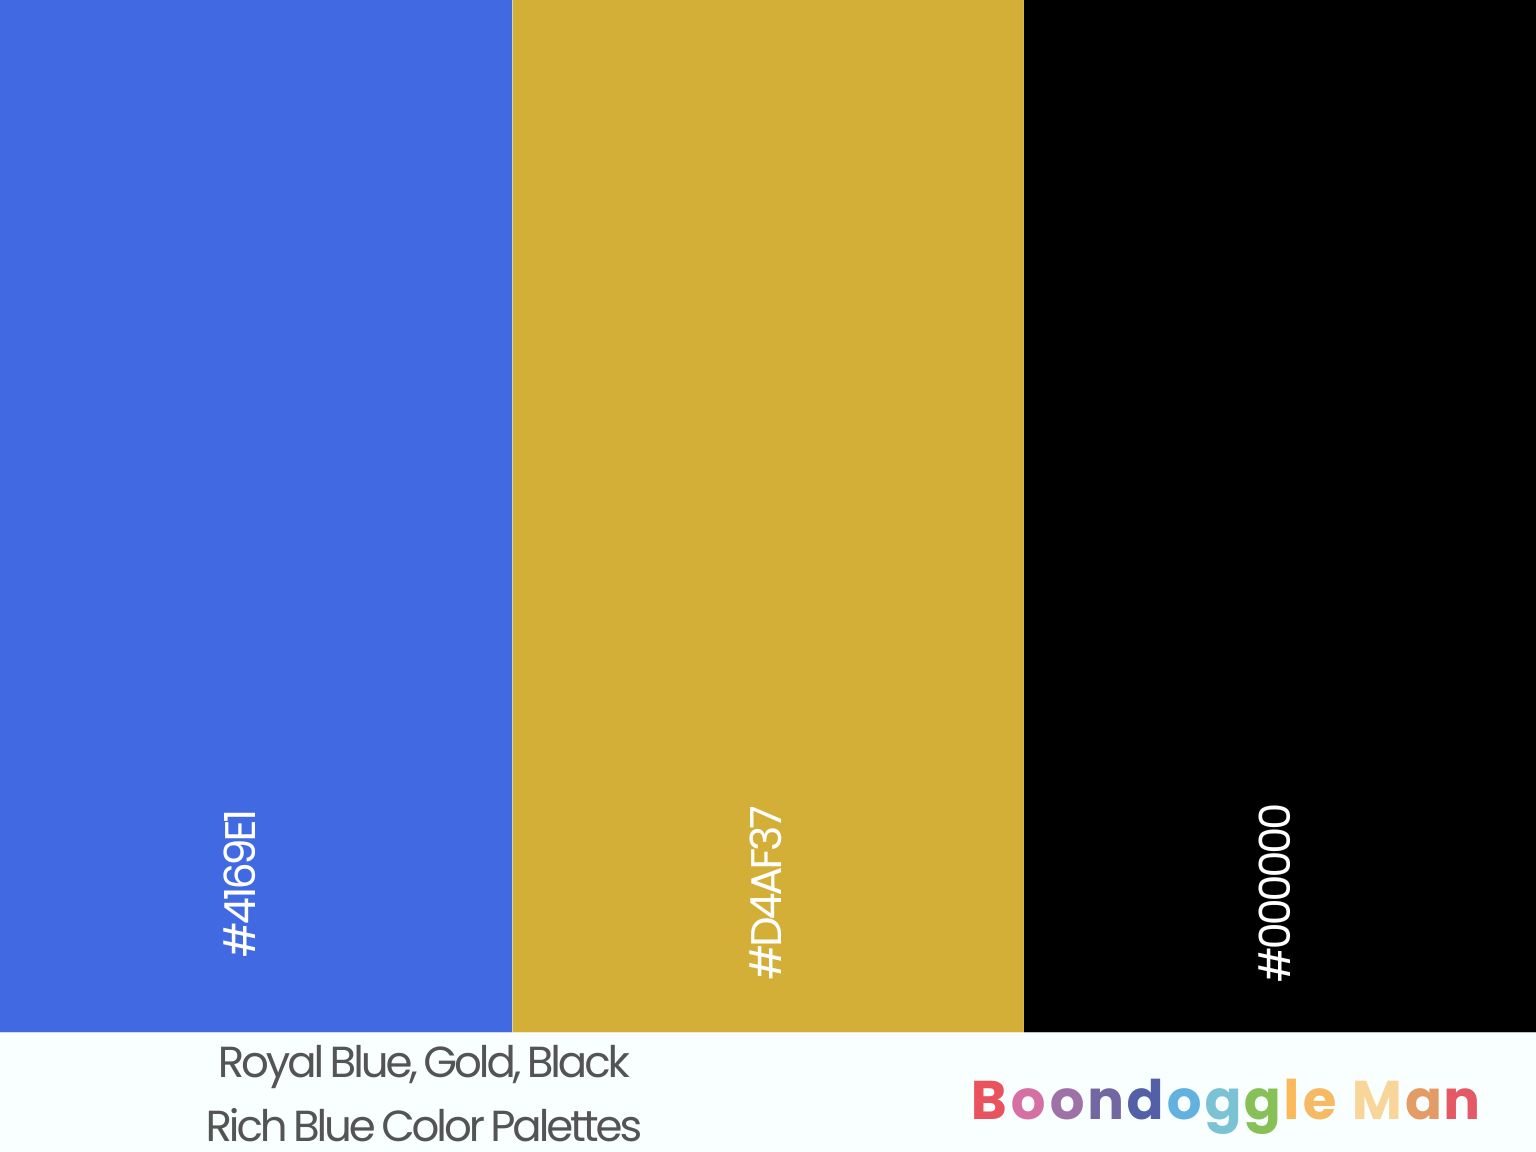 Royal Blue, Gold, Black